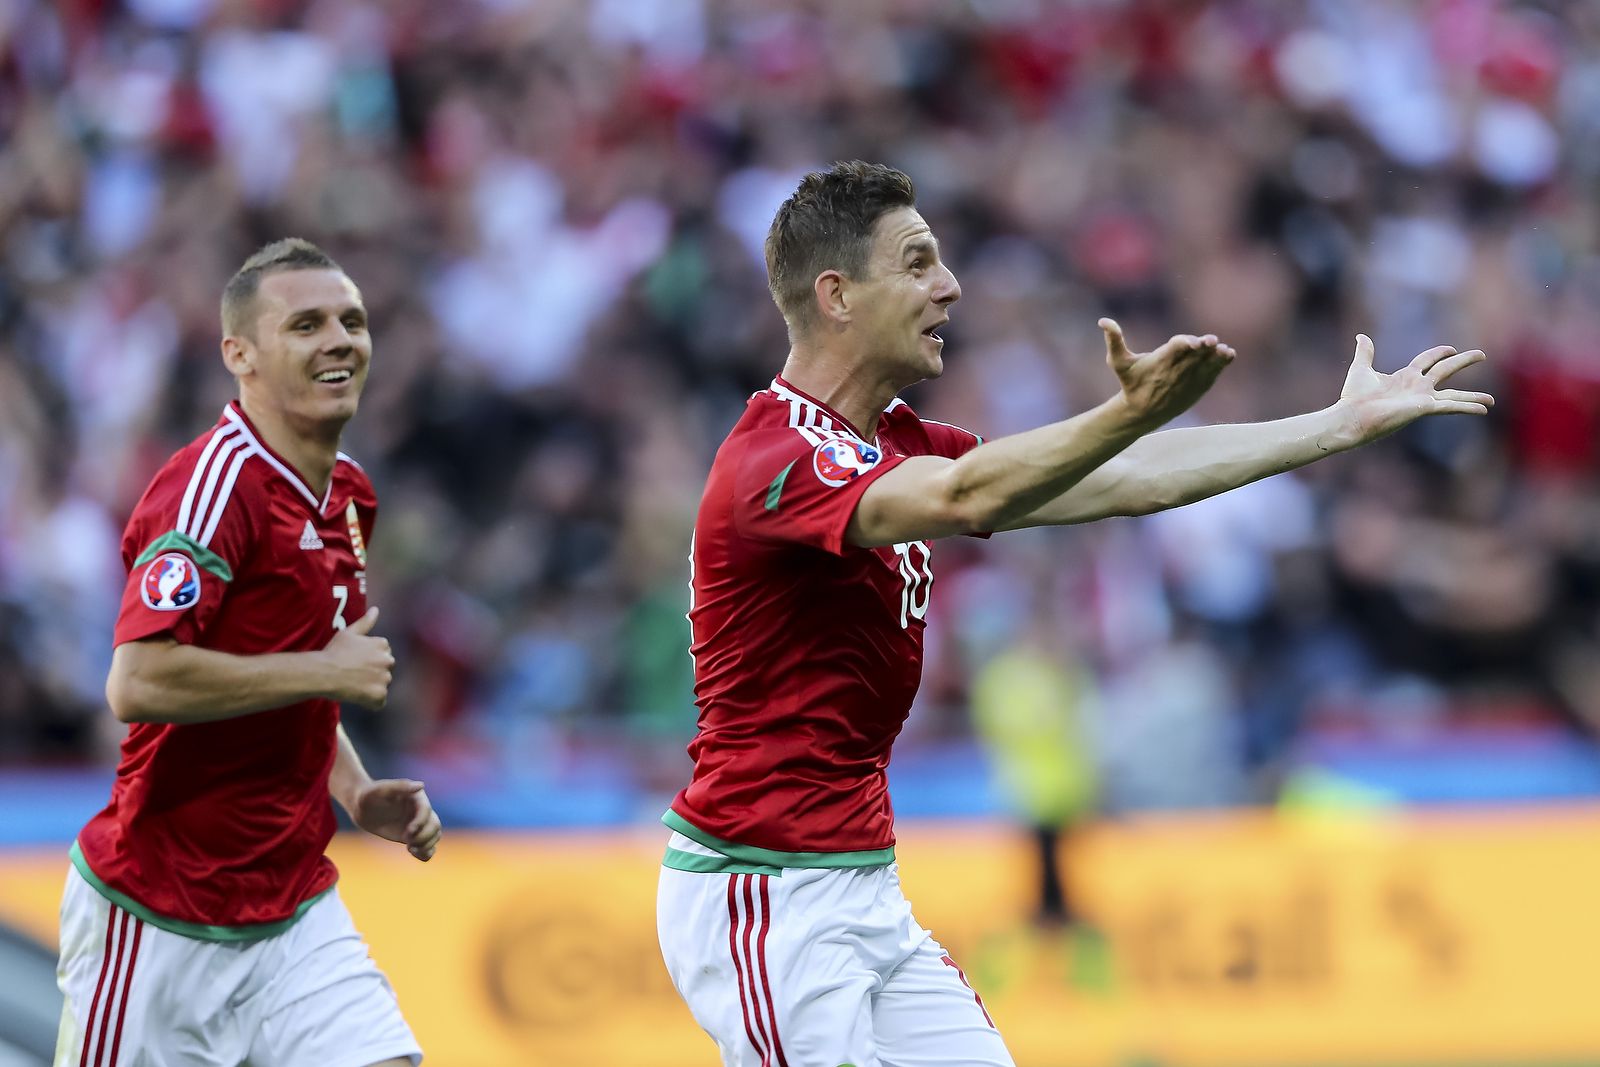 Zoltan Gera celebrates after scoring Hungary’s first goal